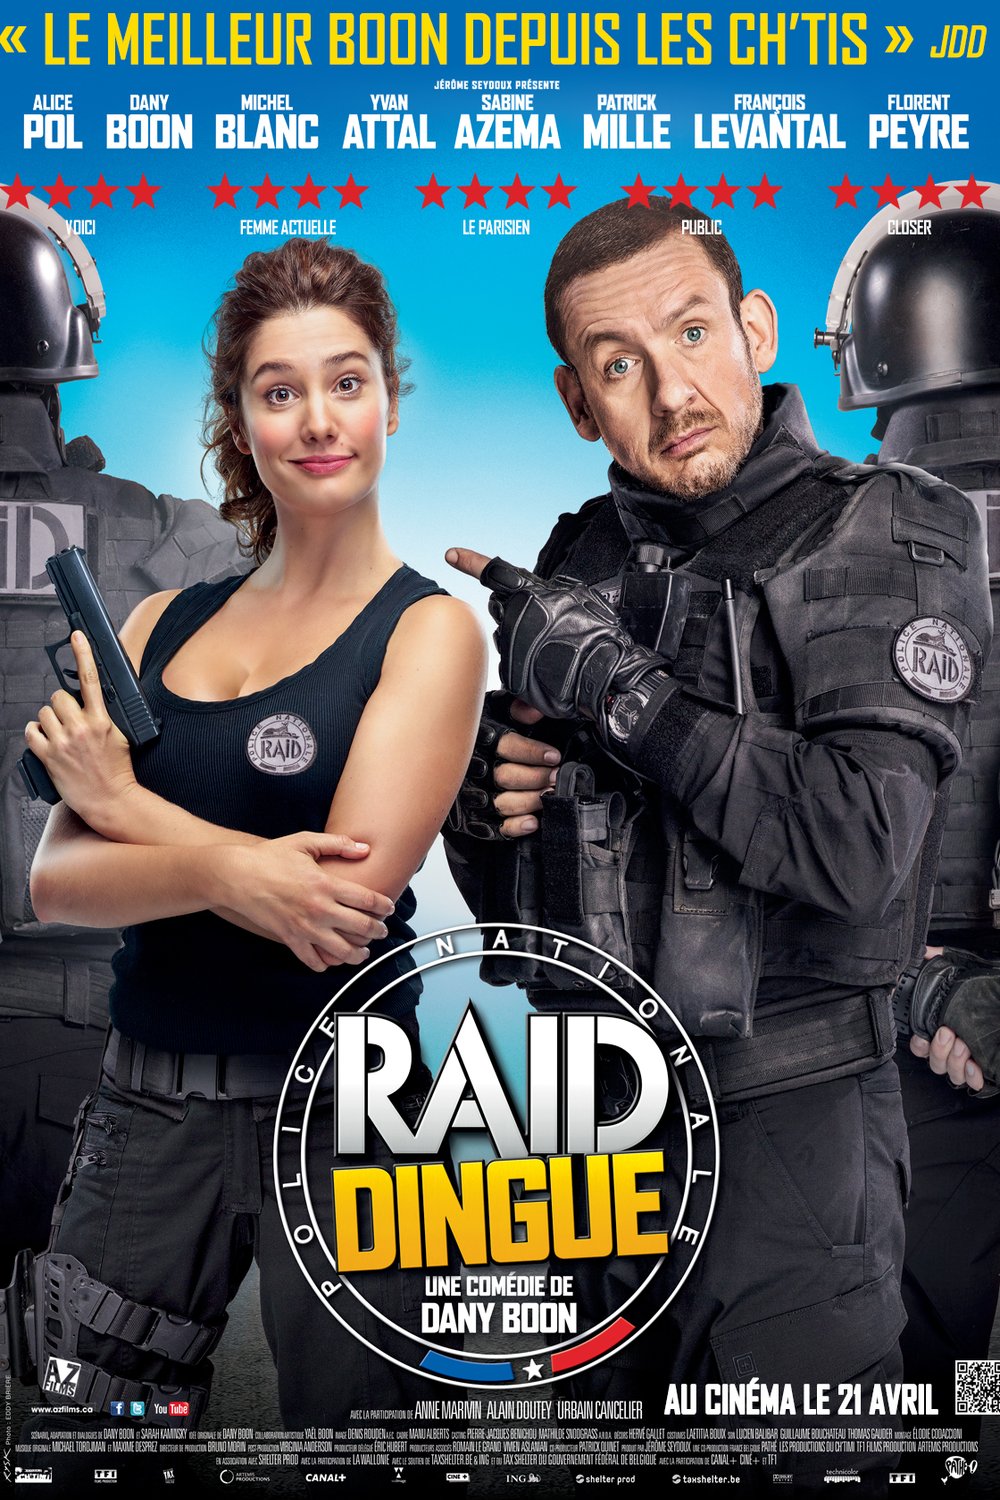 Poster of the movie Raid dingue